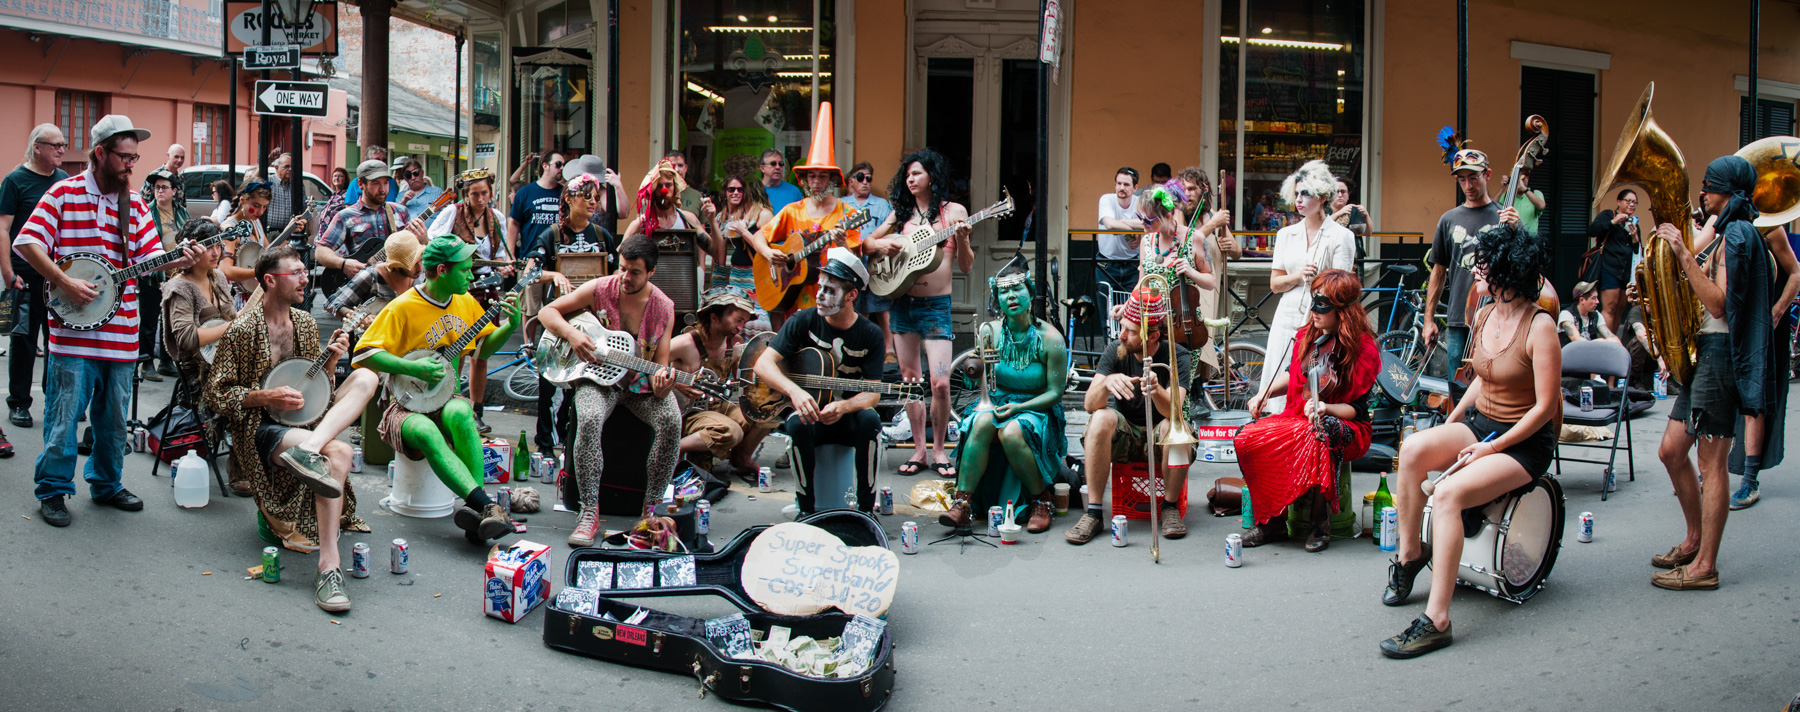 new orleans street musicians-76